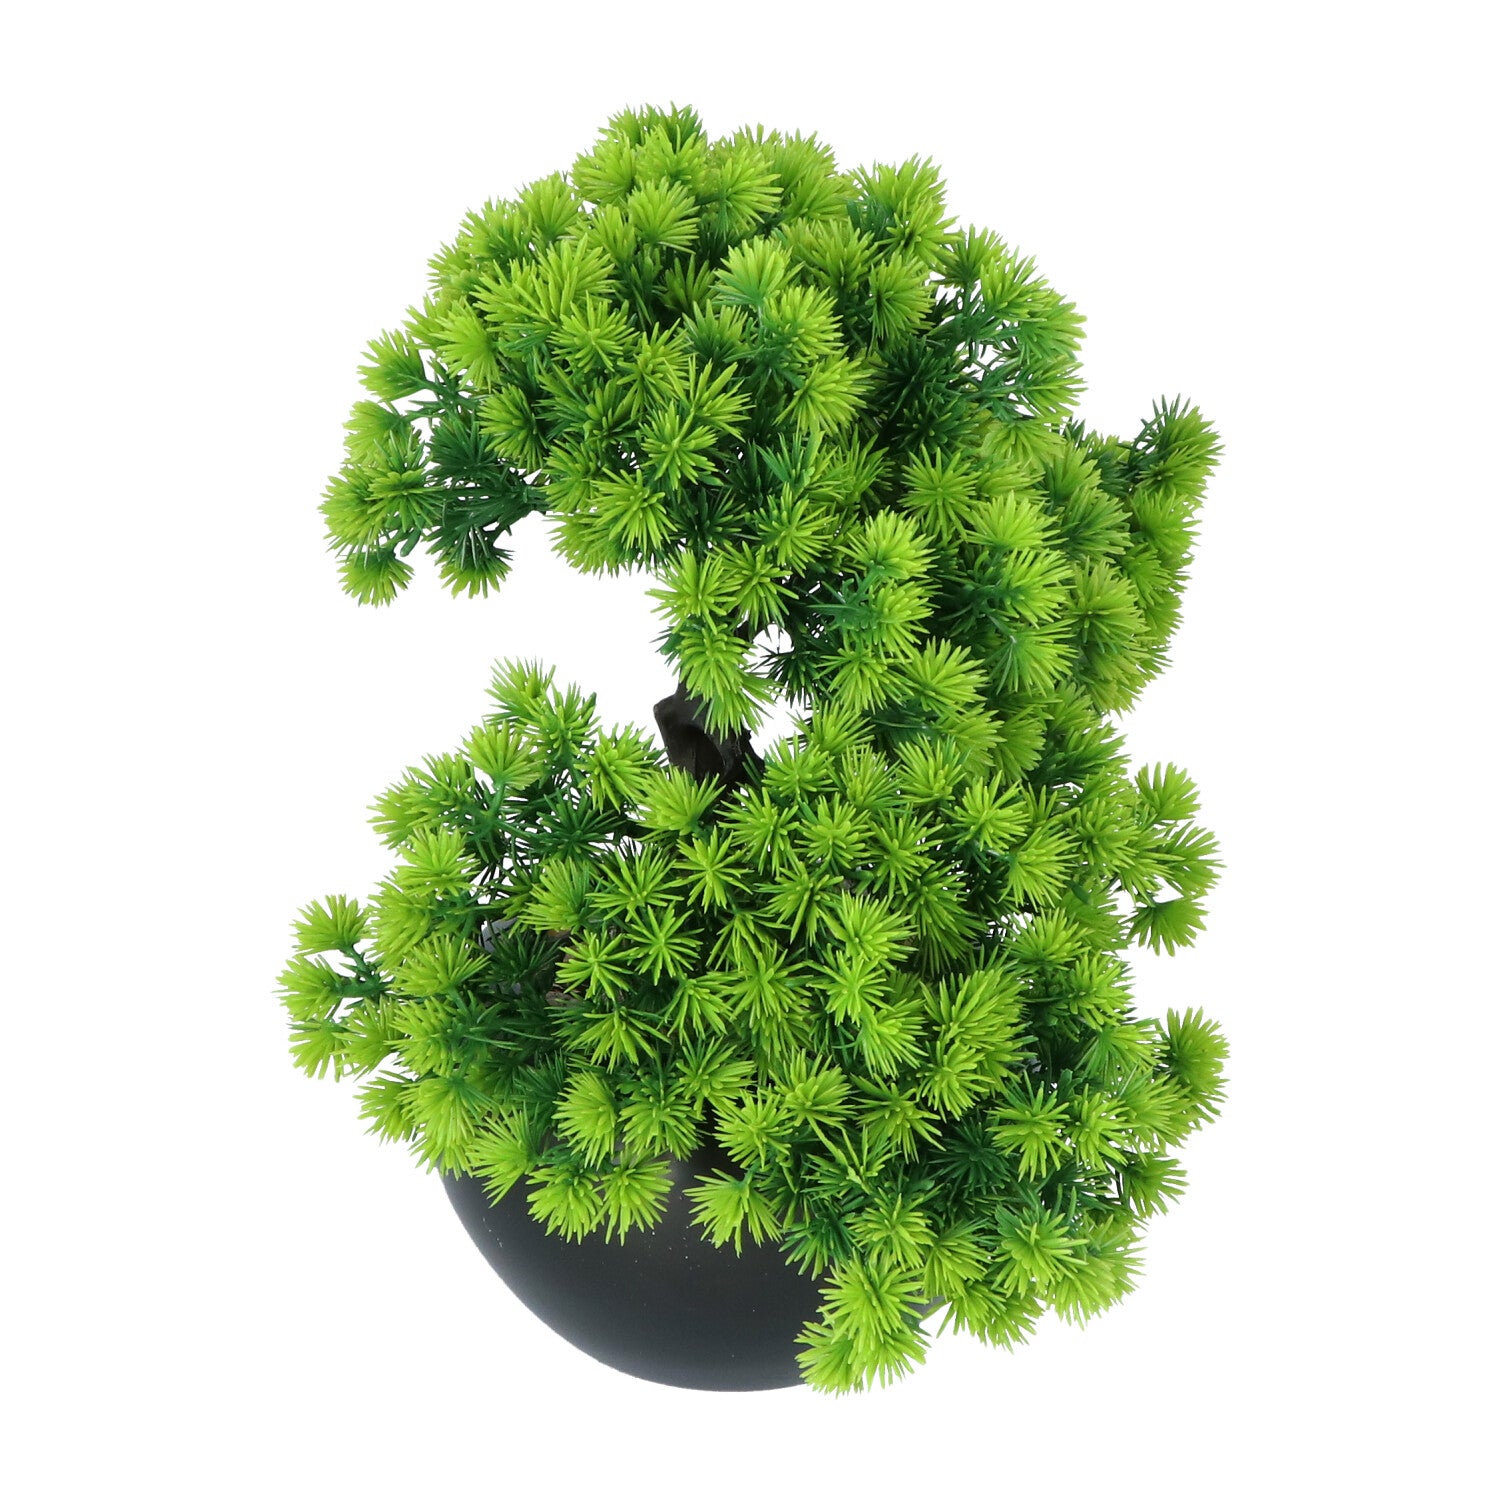 Kopu® Kunstplant Bonsai Lariks 26 cm met zwarte Pot - Bonsai boompje